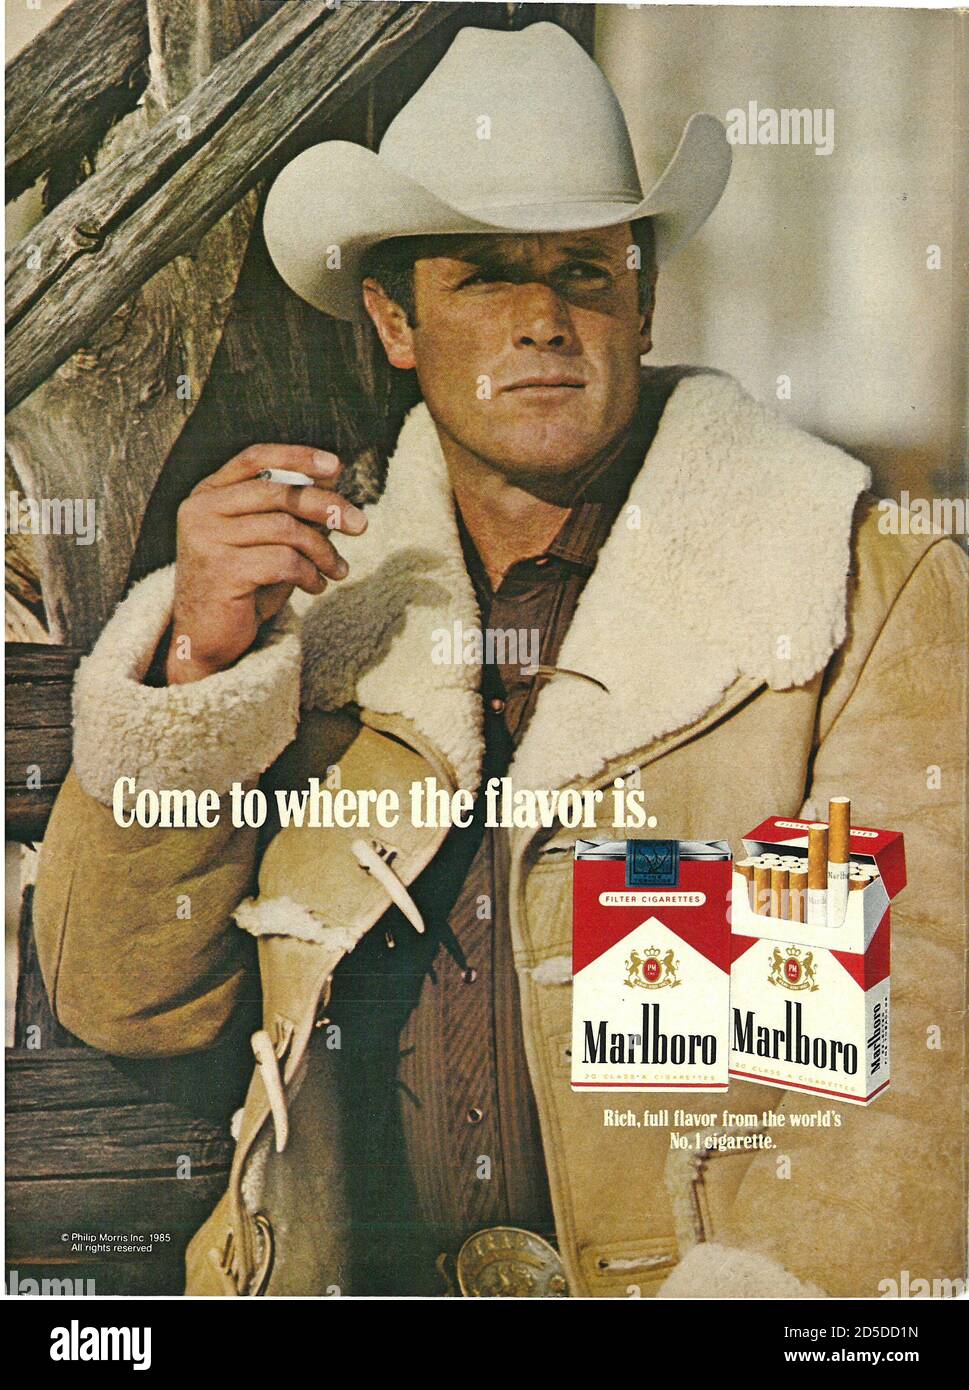 current marlboro cigarette ads